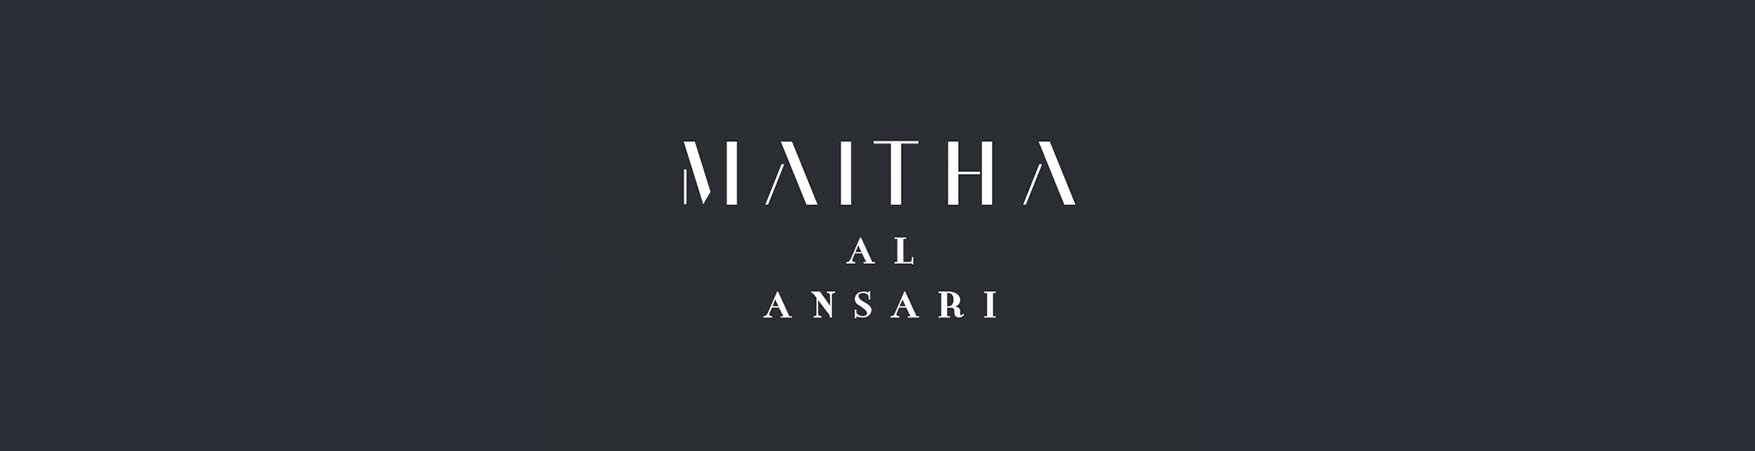 Maitha Alansari